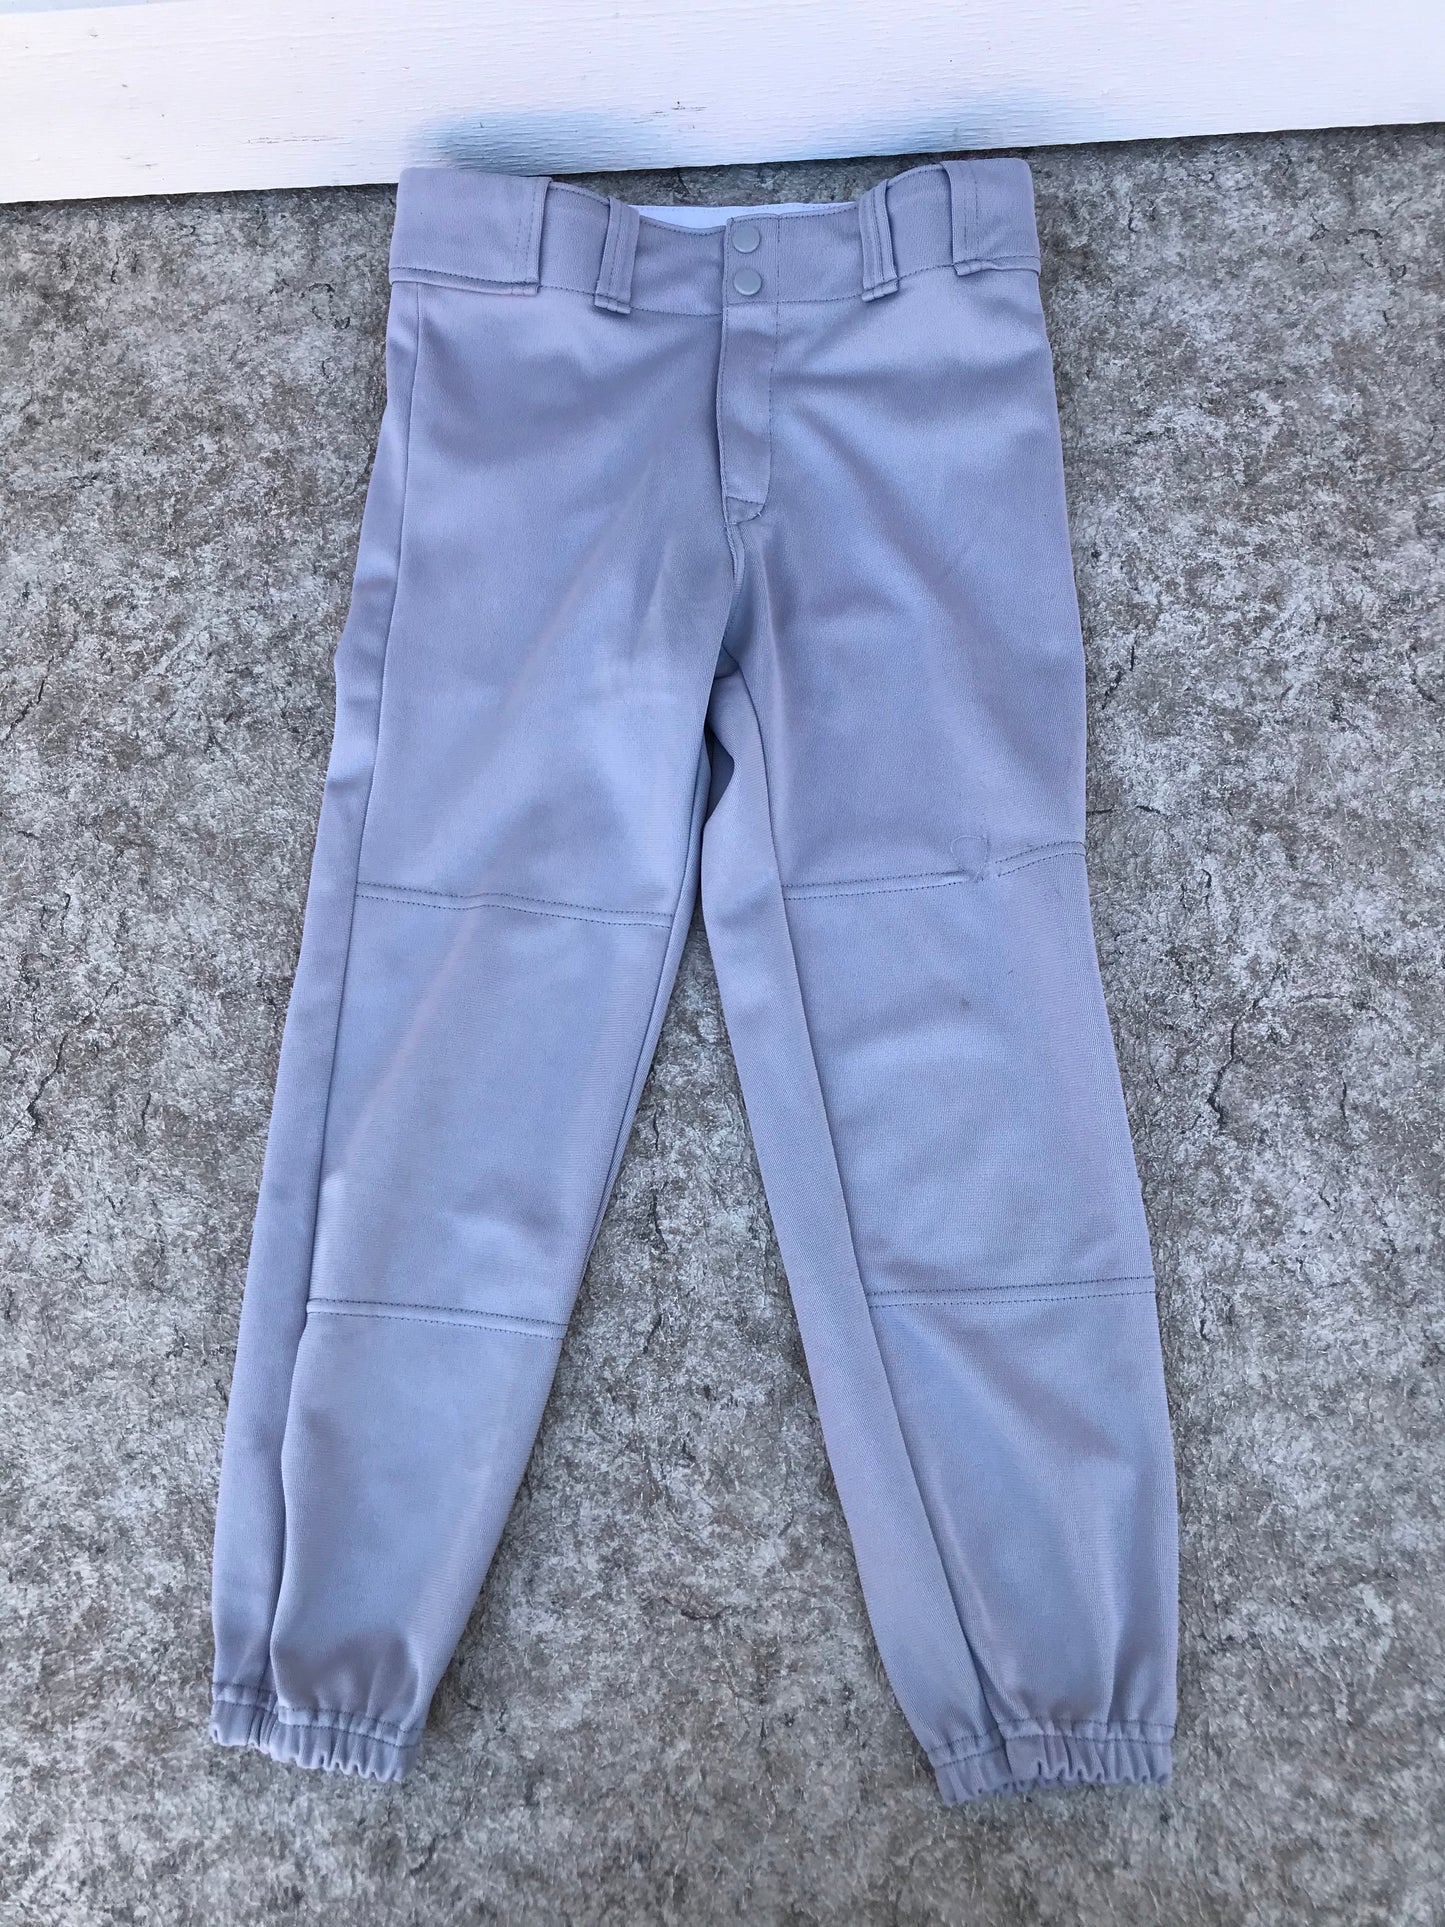 Baseball Pants Child Size Y X Large 12-14  Rawlings Grey  As New